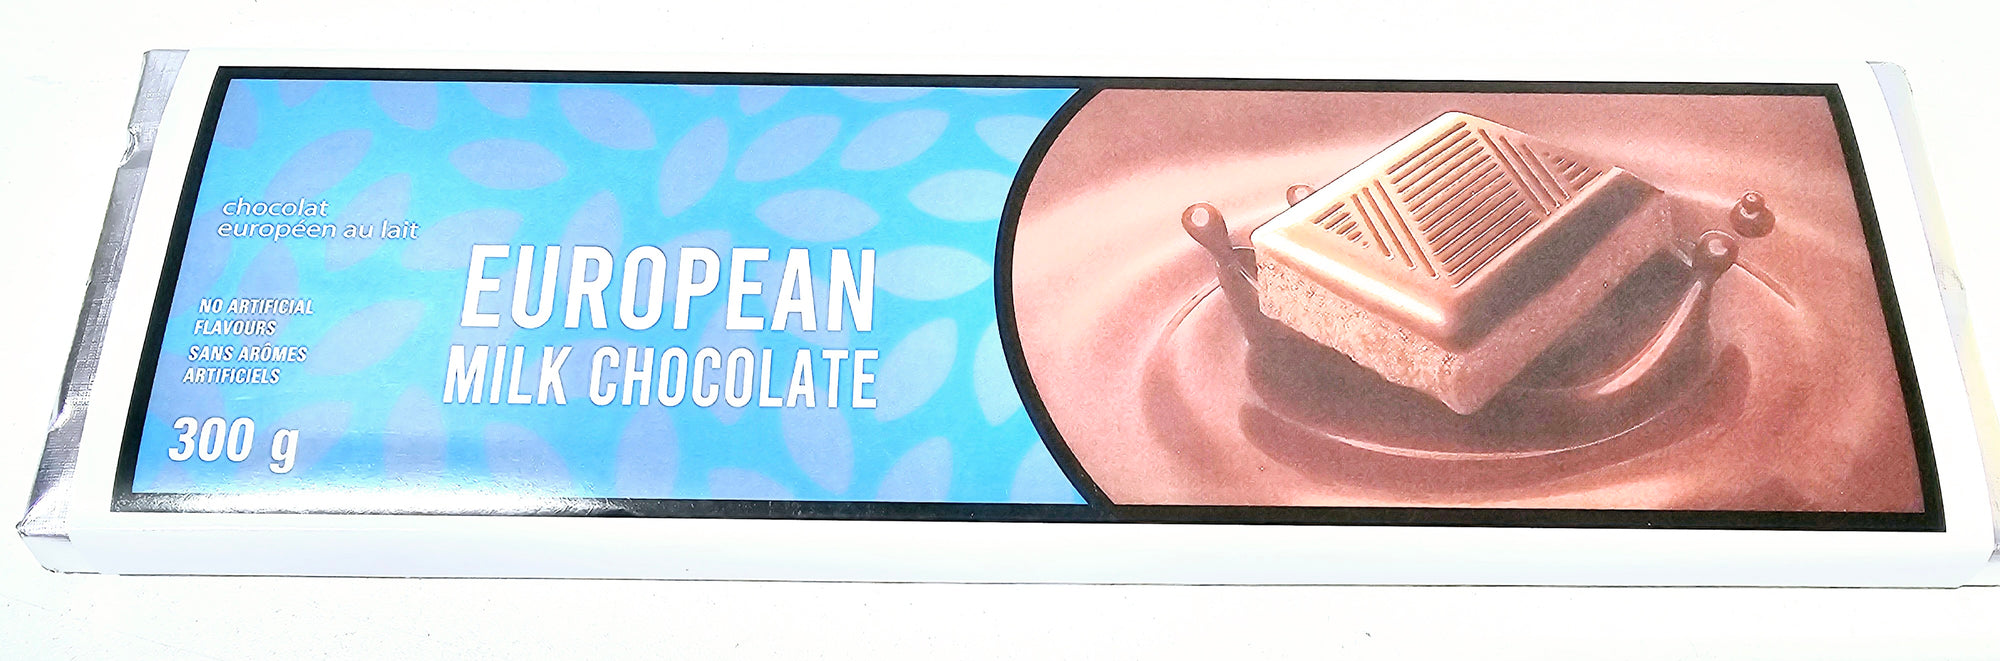 European Milk Chocolate 300g